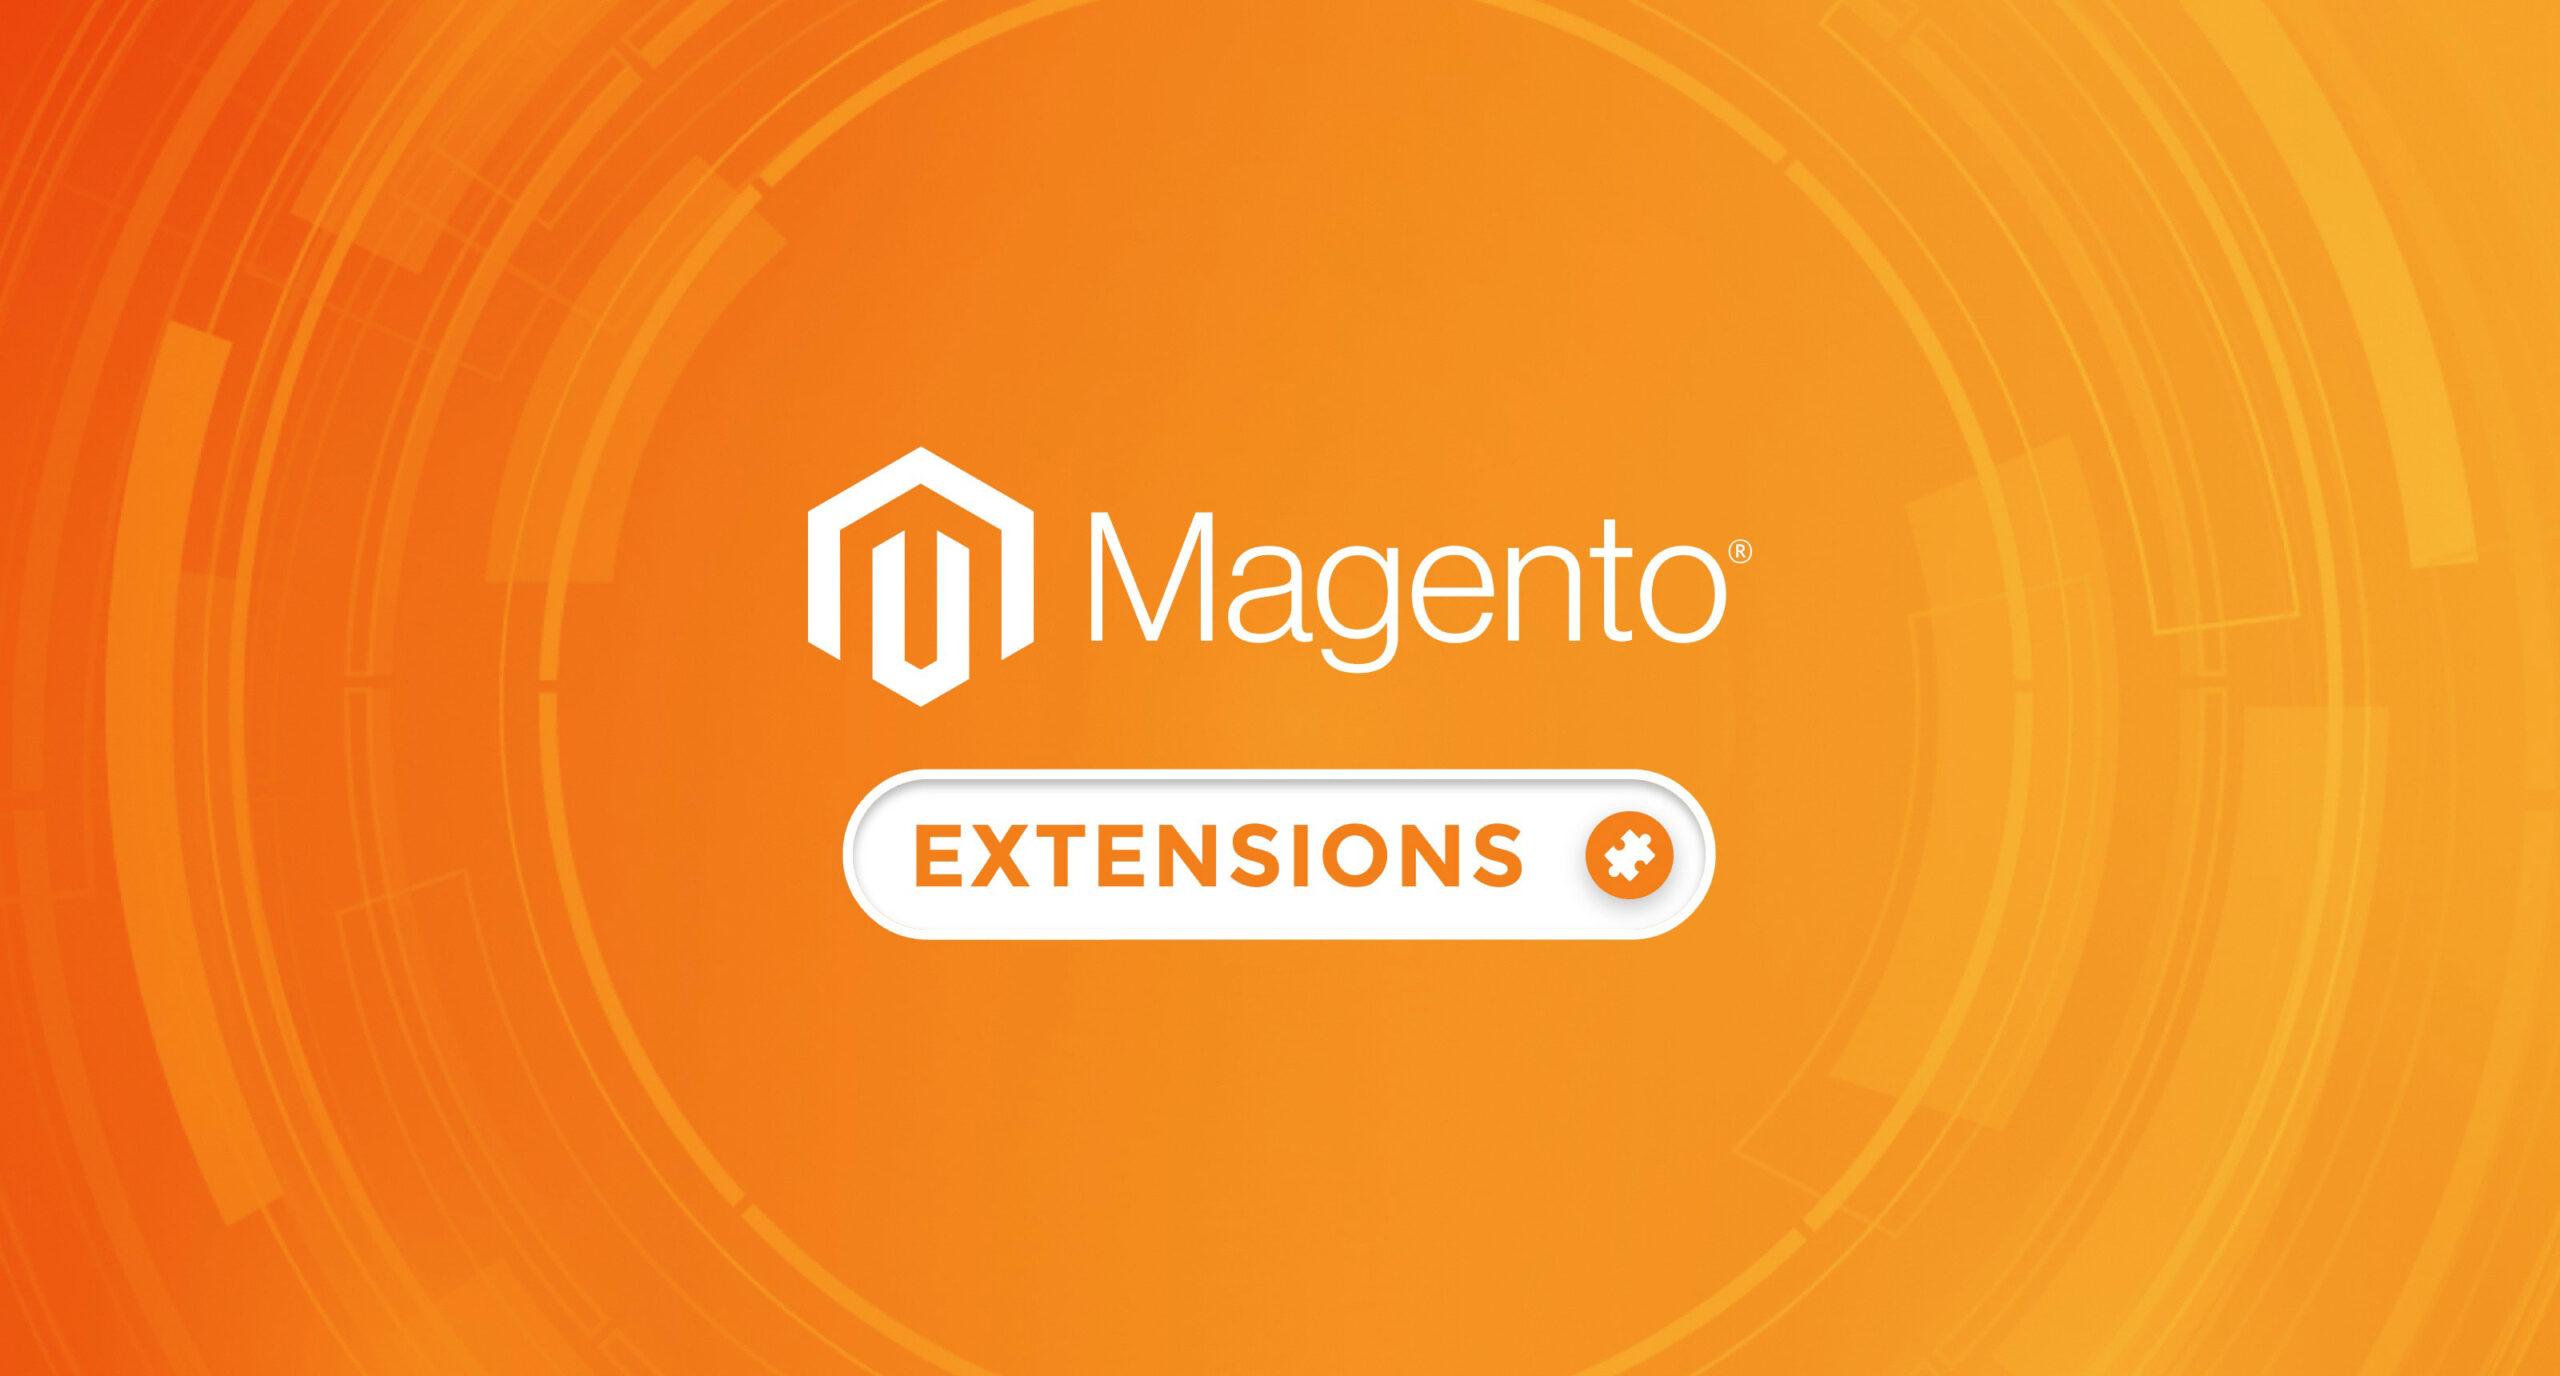 magento extension best practices